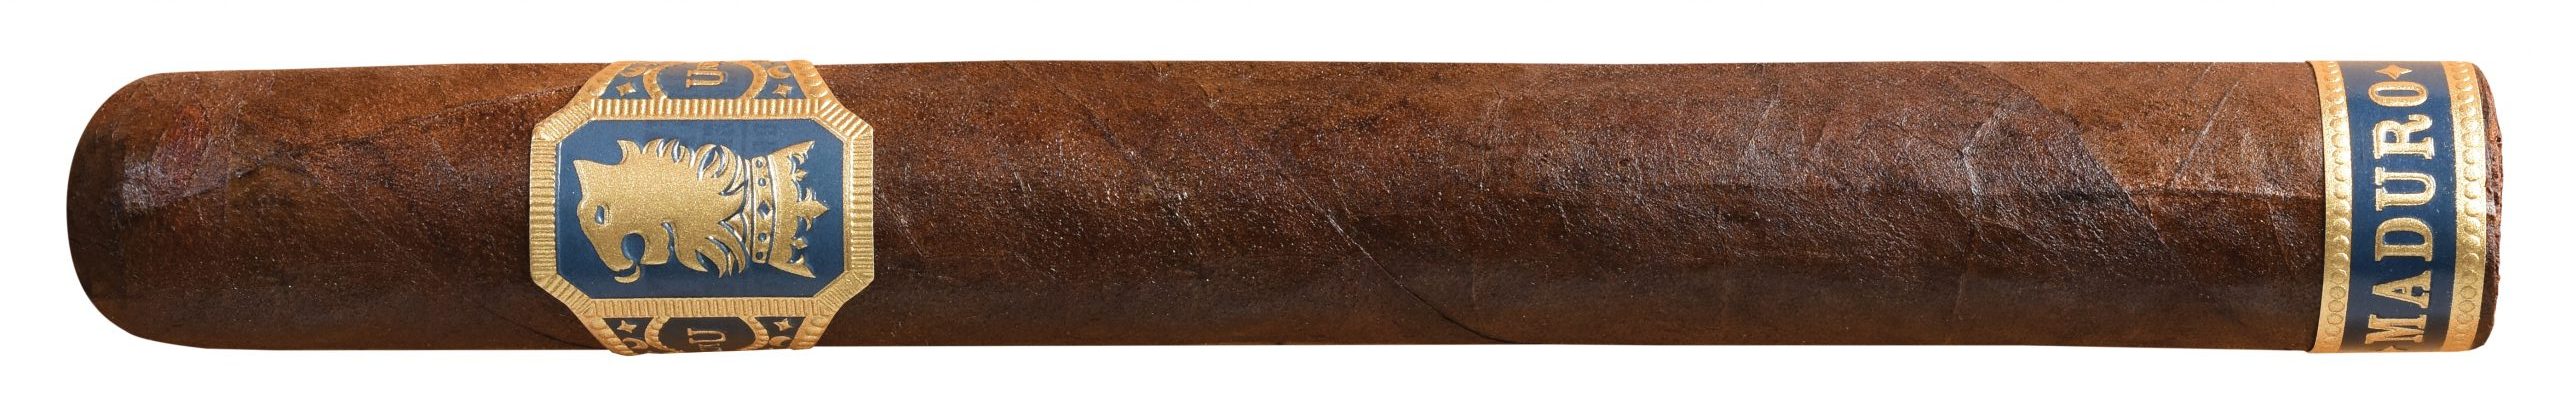 undercrown double corona single cigar